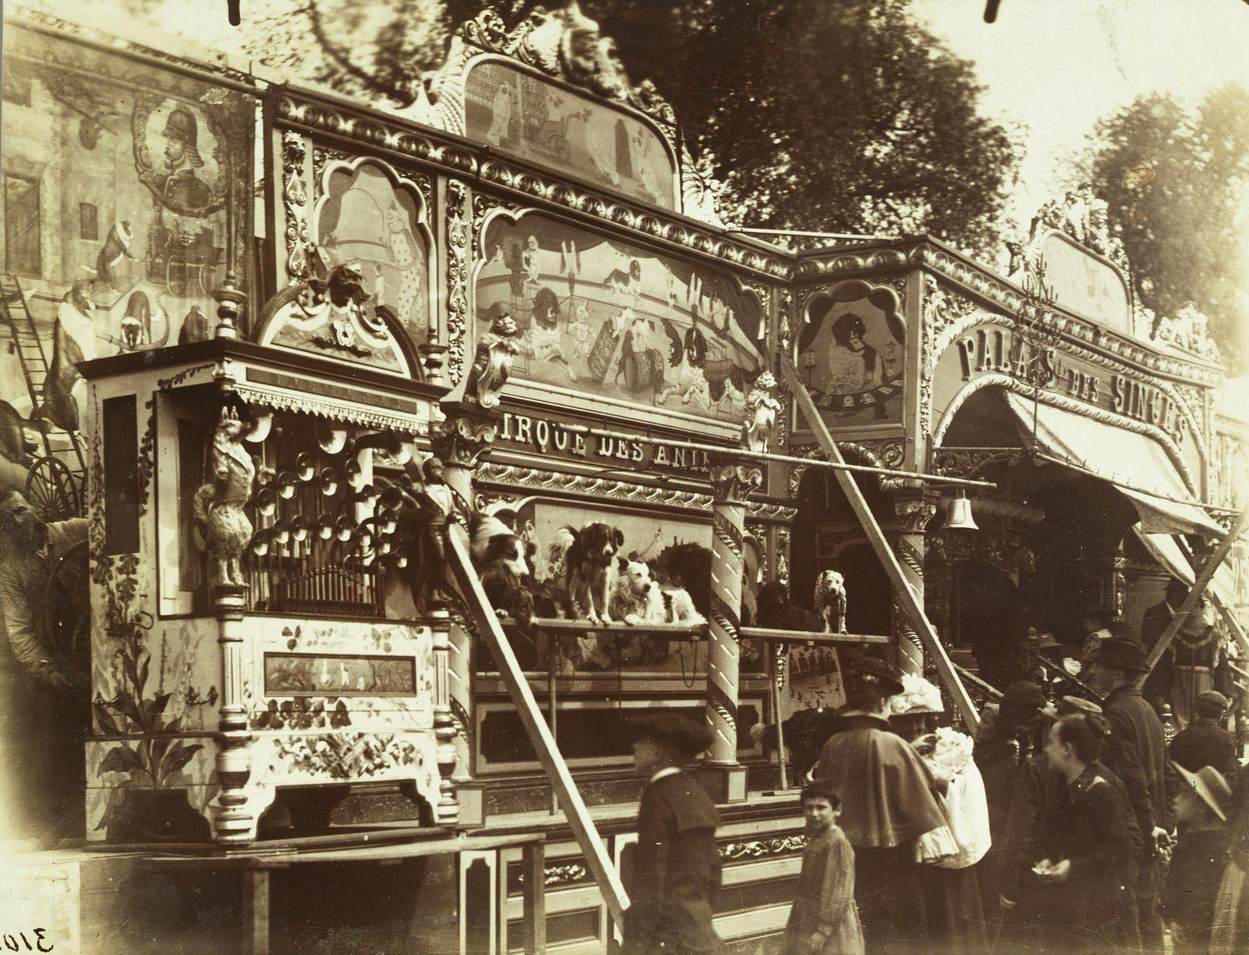 Animal Circus, Fete des Invalides, 1898